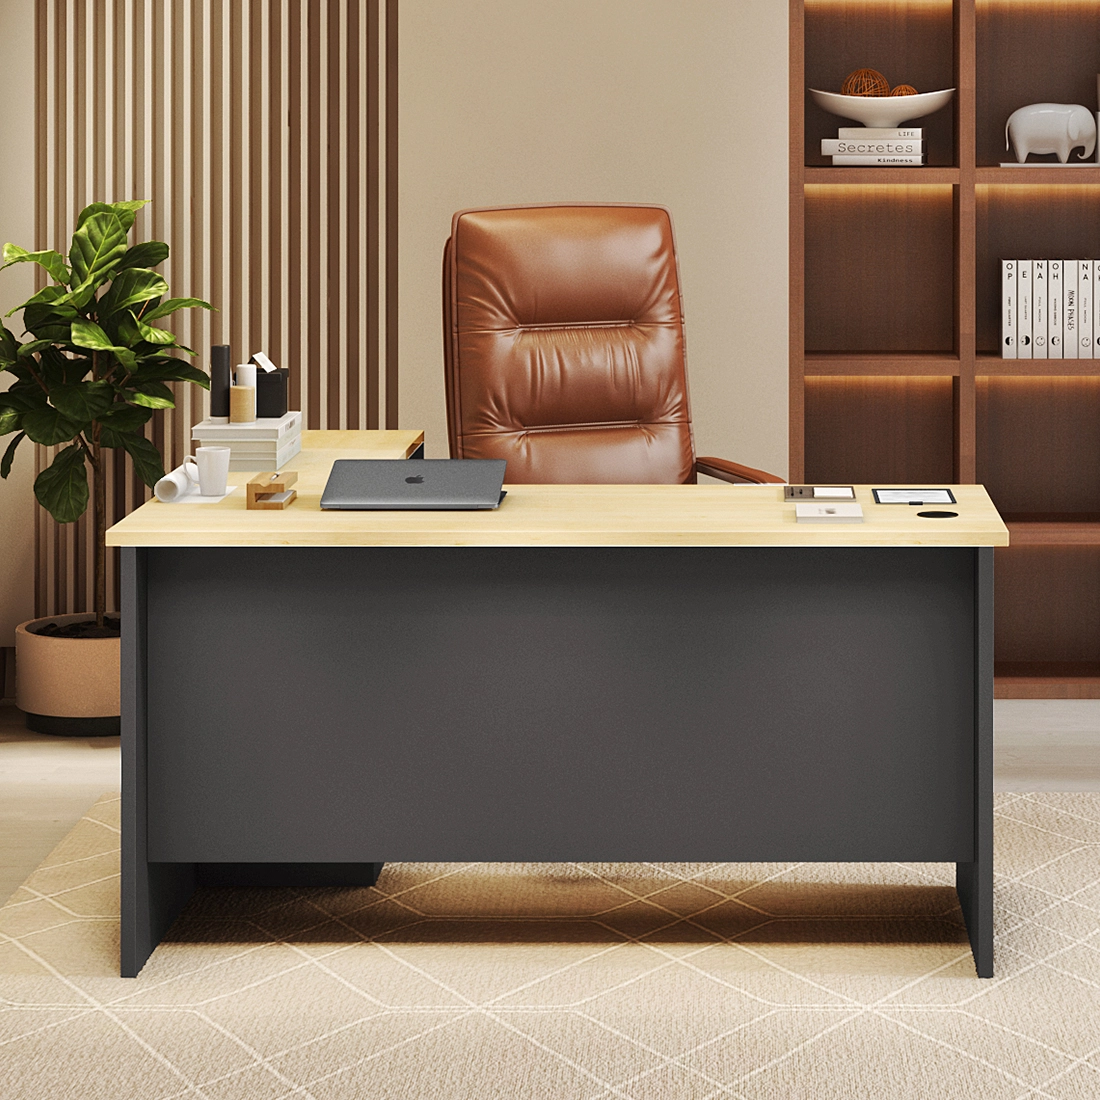 5 Trends In Modern Office Furniture Design